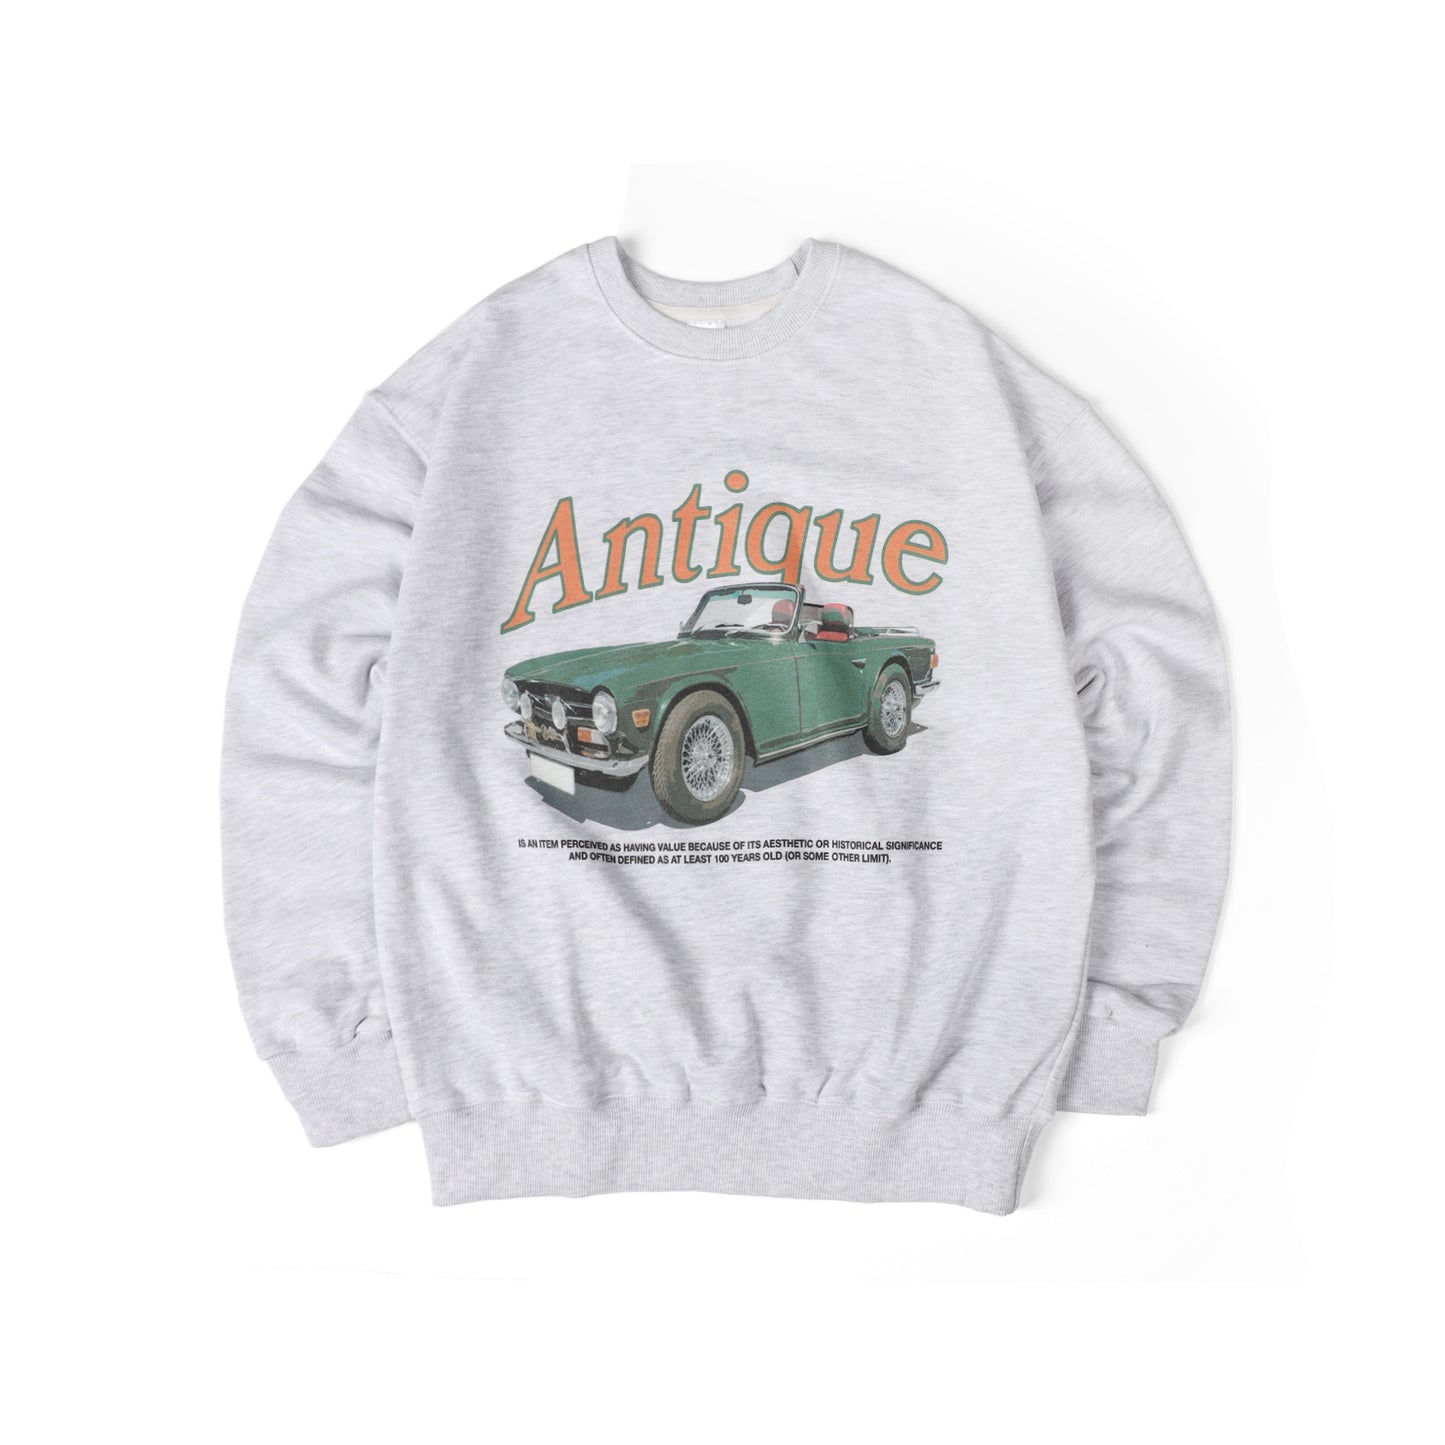 Antique Sweatshirt Designed by JT